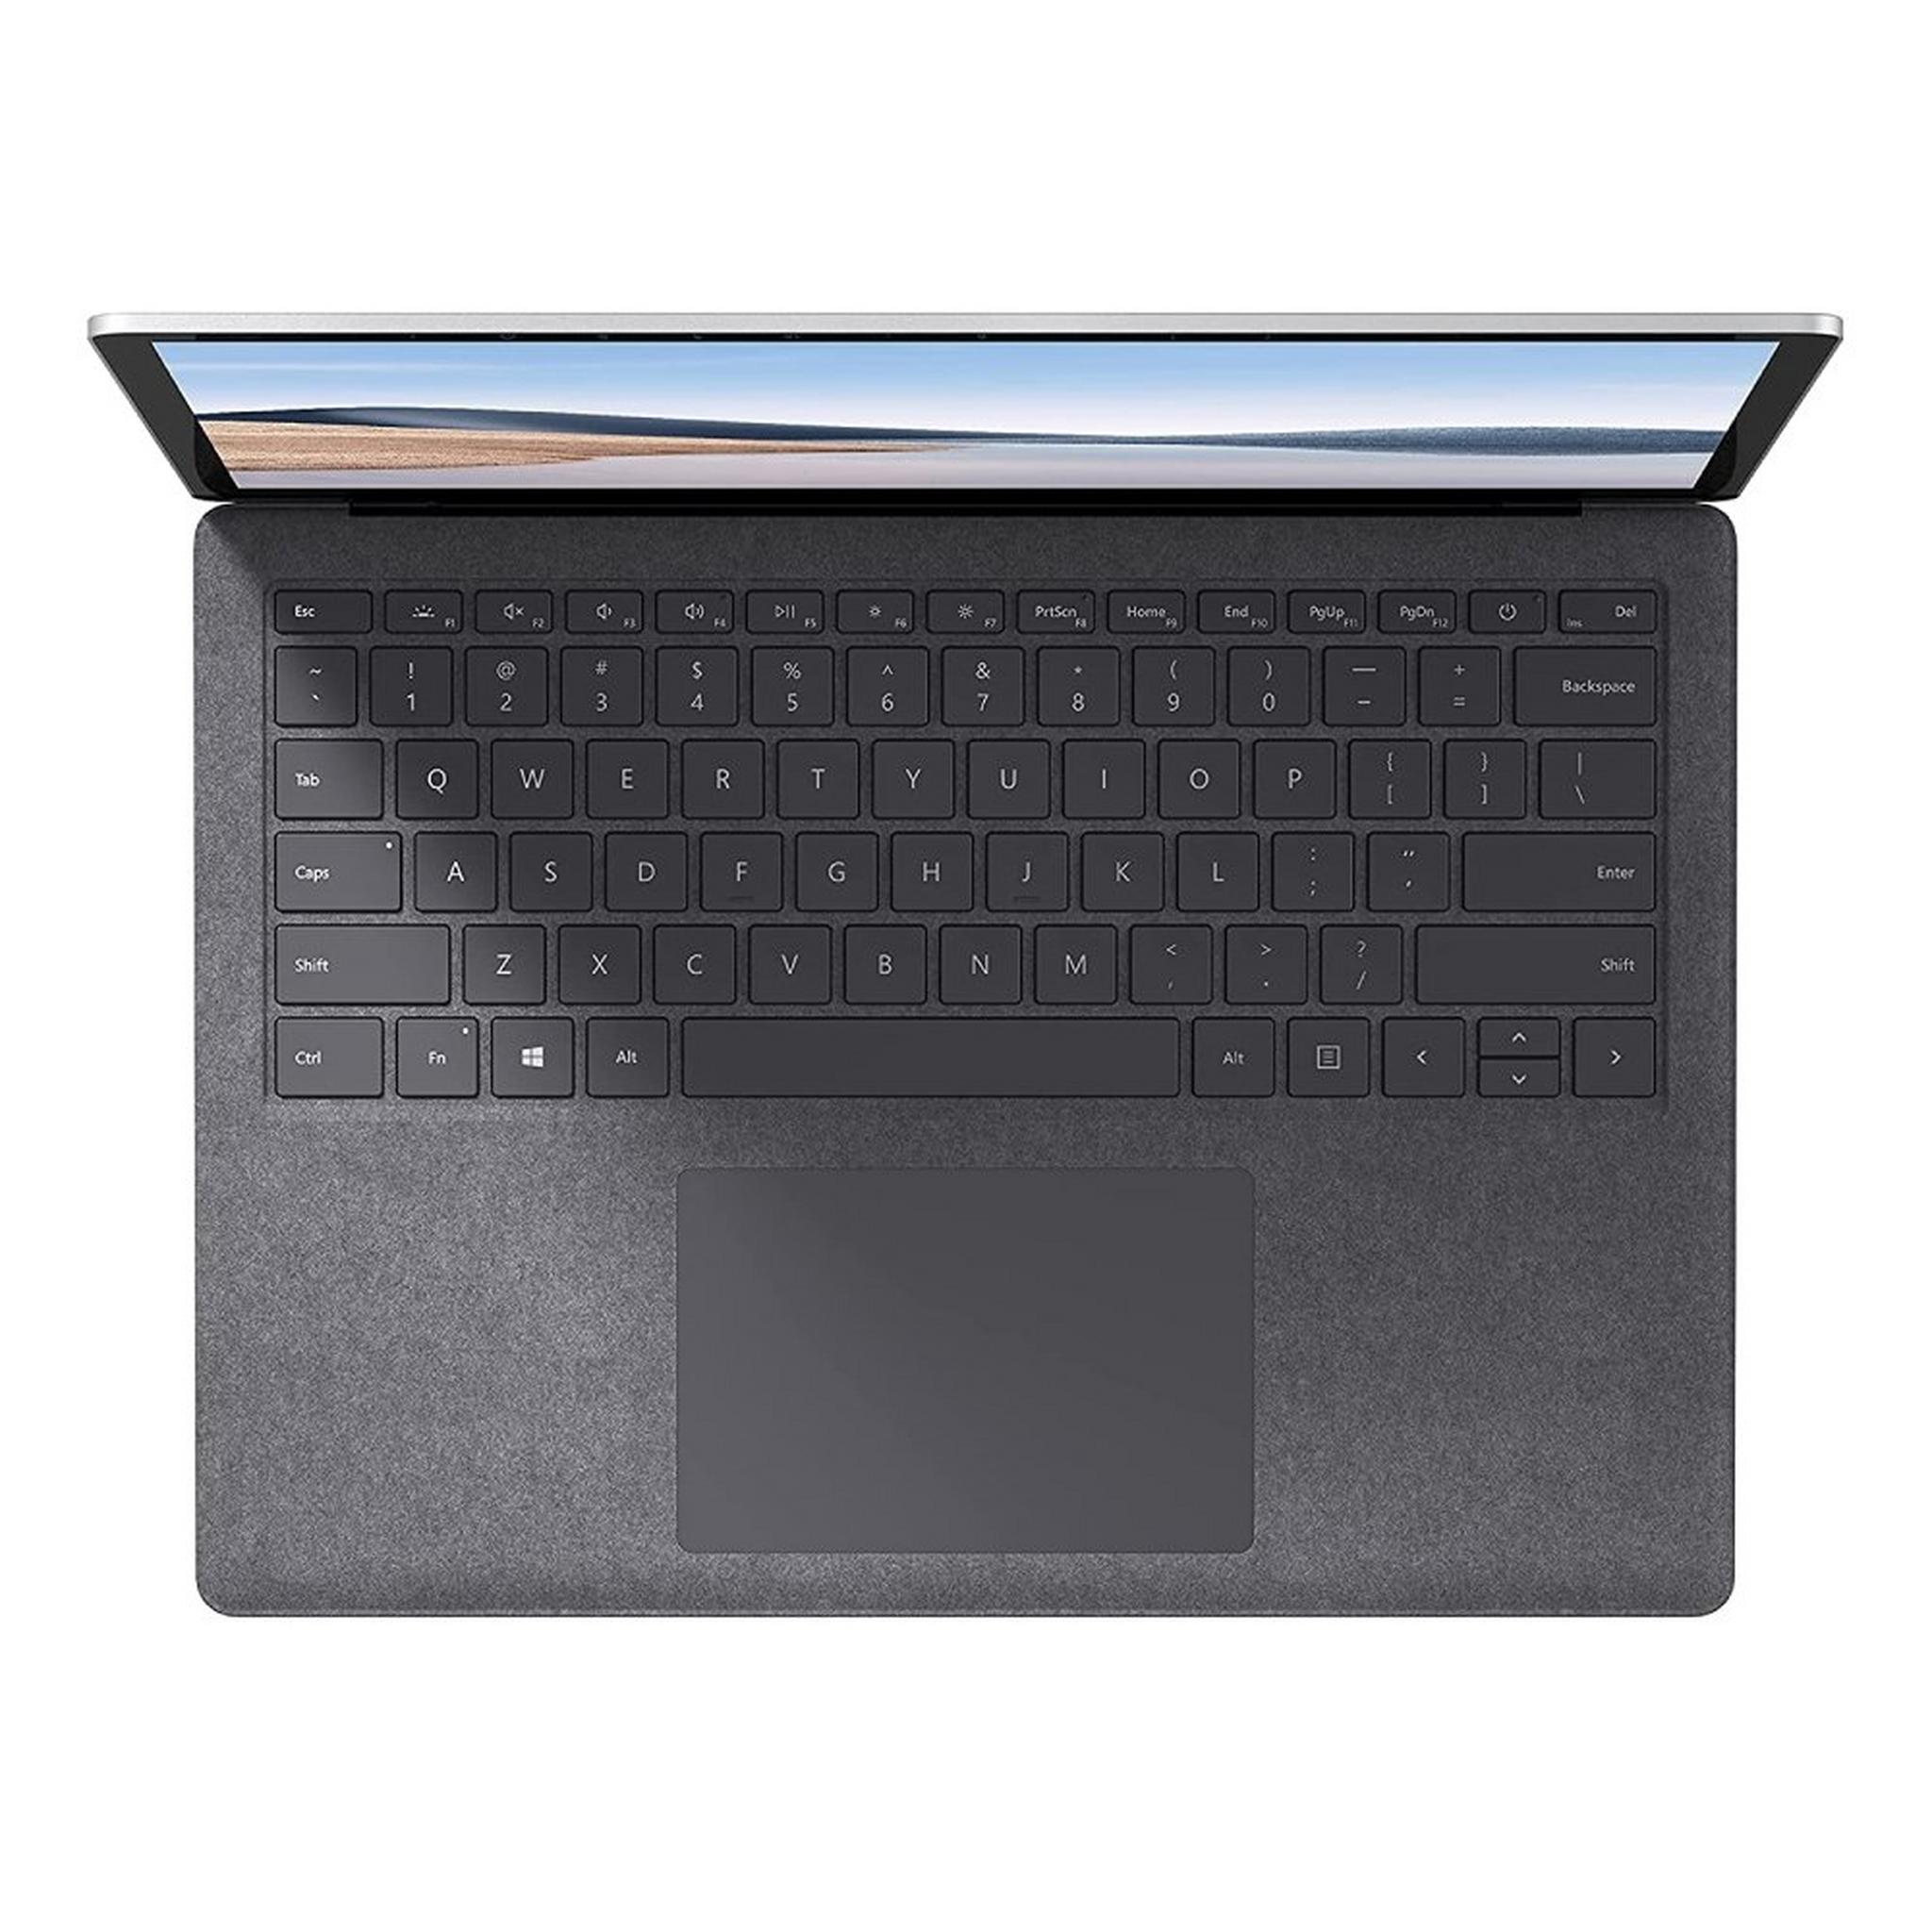 Microsoft Surface 4 Ryzen 7, 8GB RAM, 256GB SSD, 15-inch Touch Laptop - Platinum